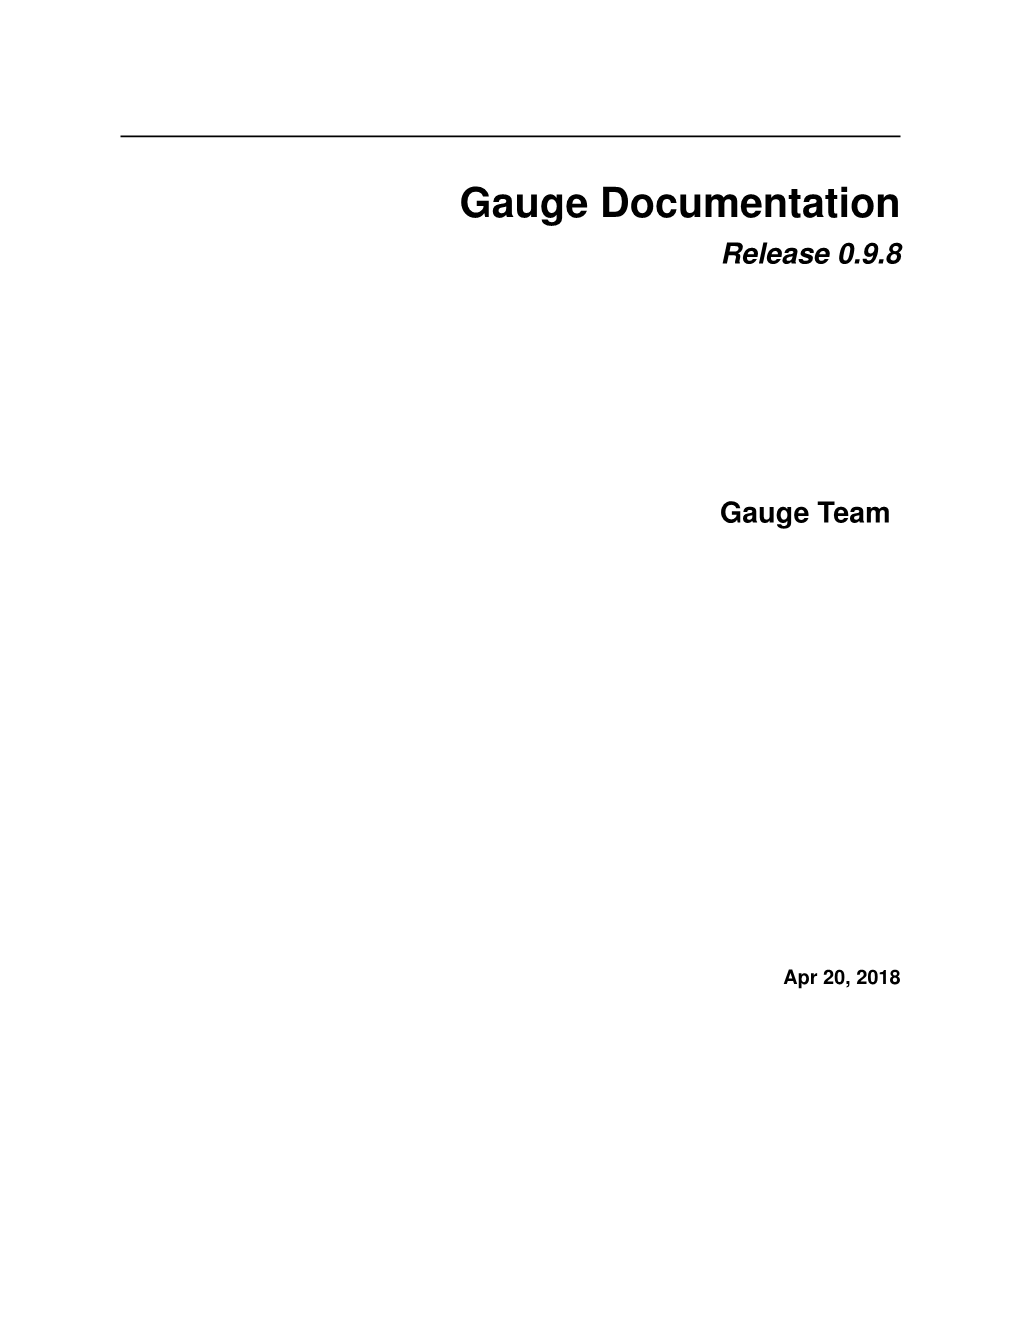 Gauge Documentation Release 0.9.8